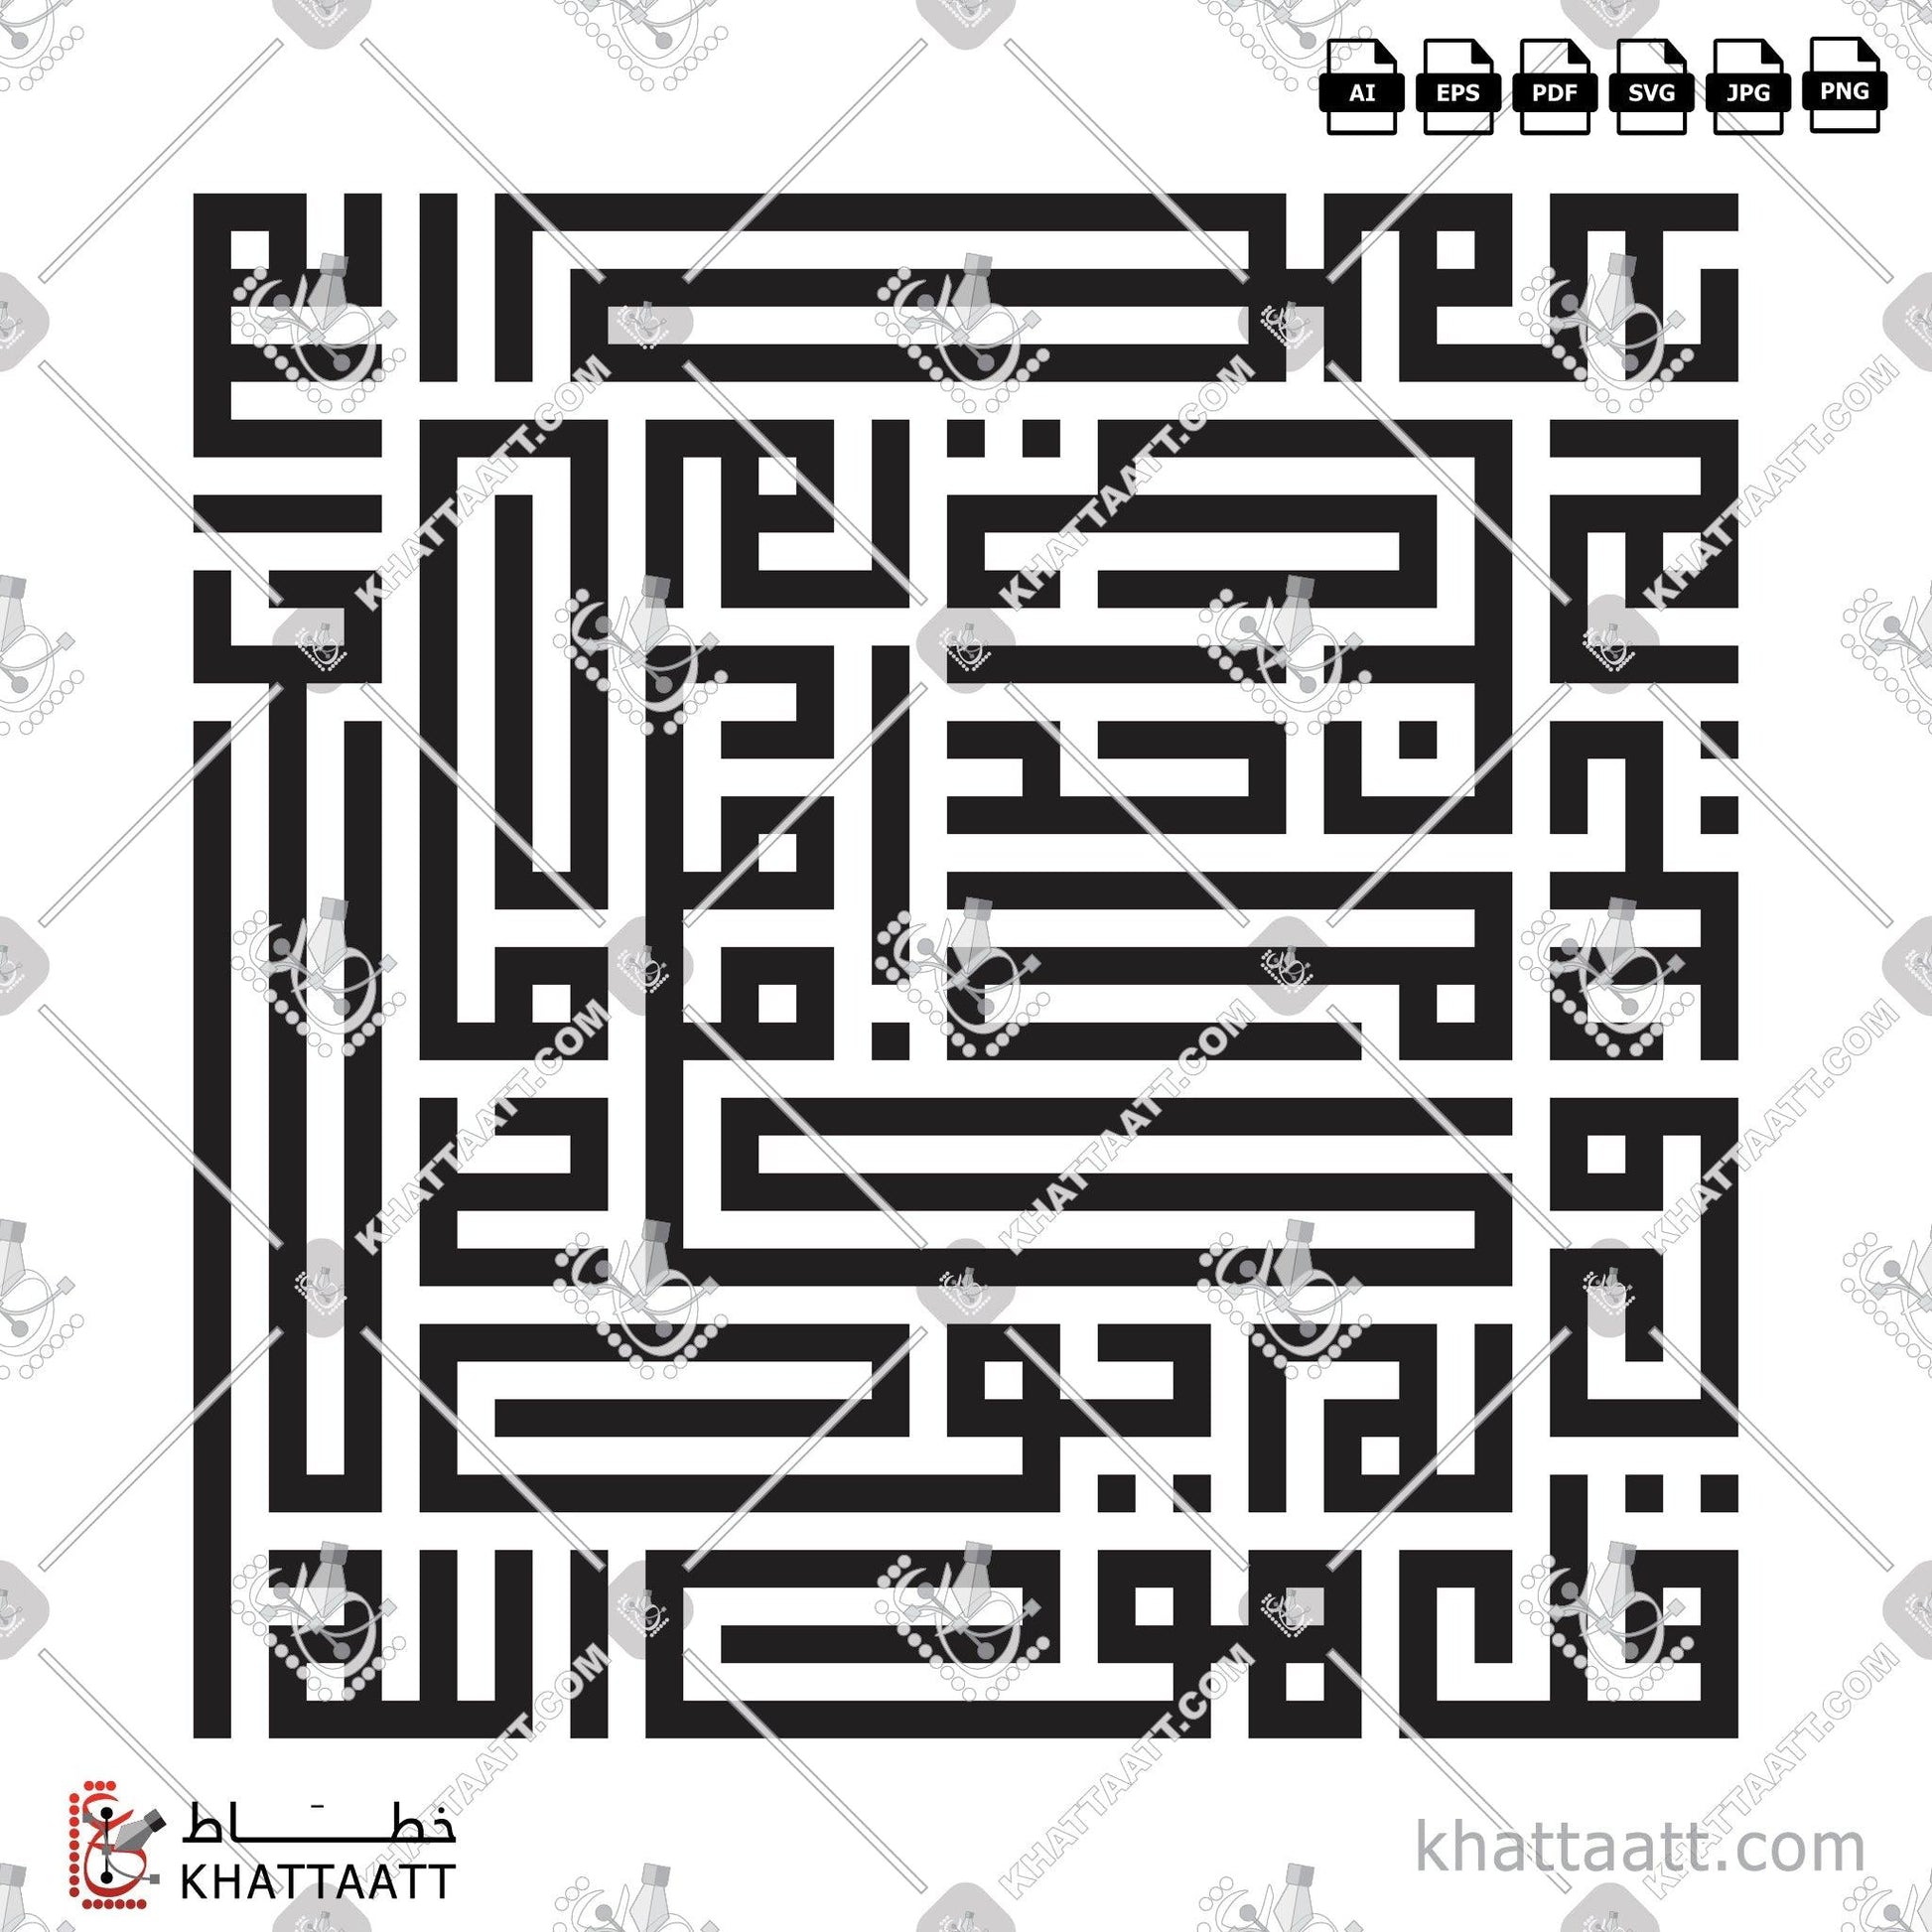 Download Arabic Calligraphy of Surat Al-Ikhlas - سورة الإخلاص in Kufi - الخط الكوفي in vector and .png